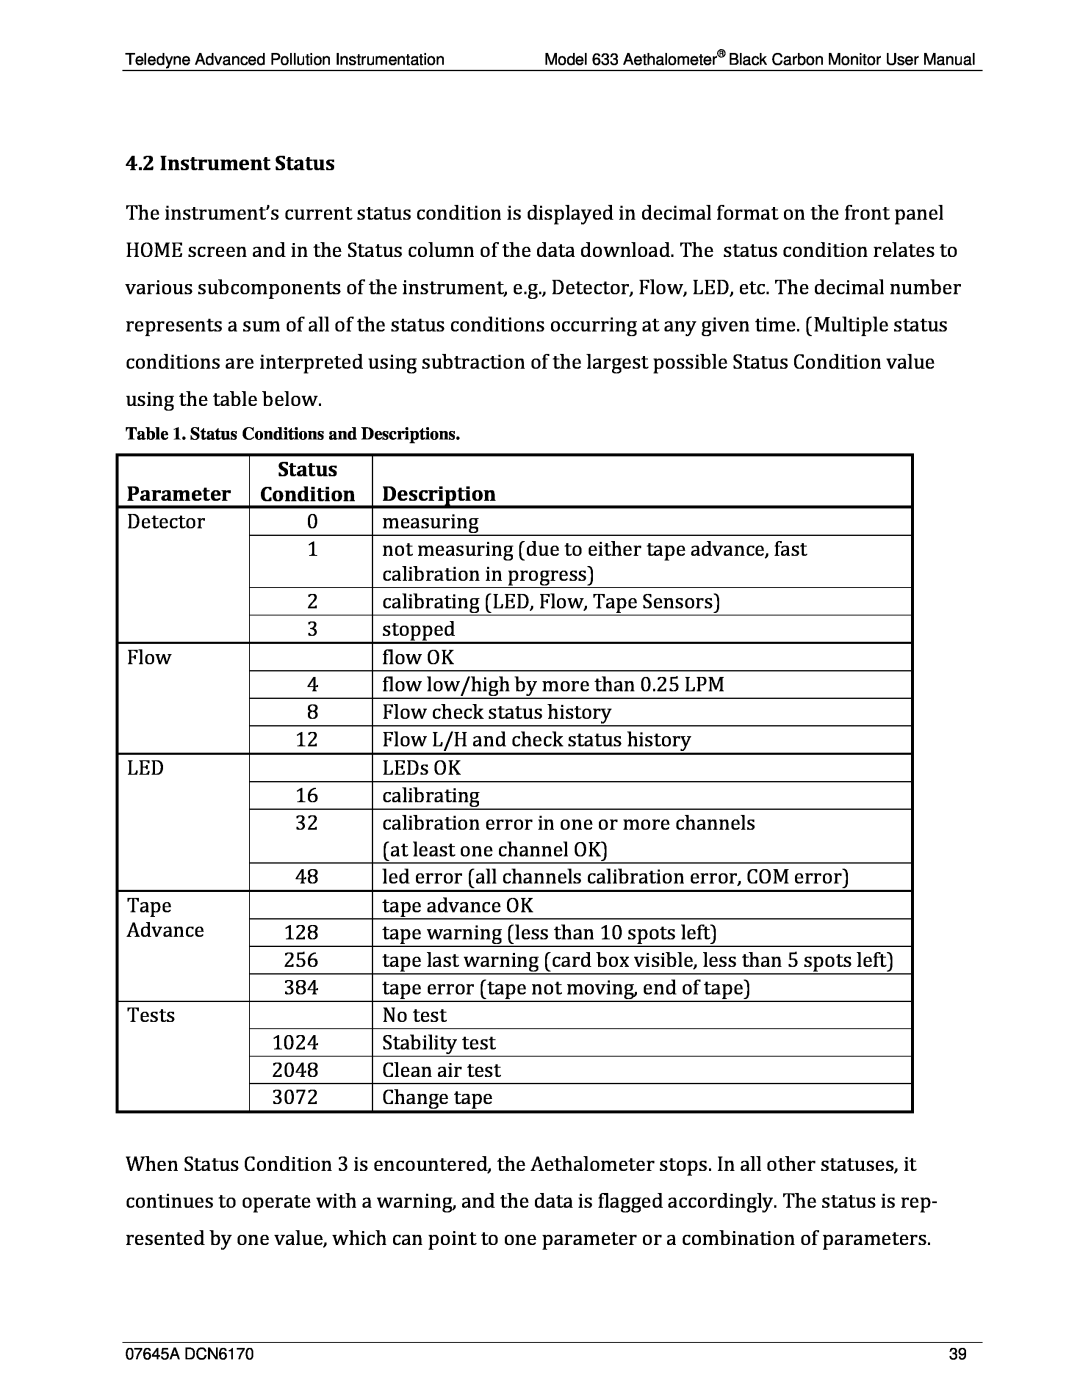 Teledyne 633 user manual Instrument Status, Parameter, Condition, Description 